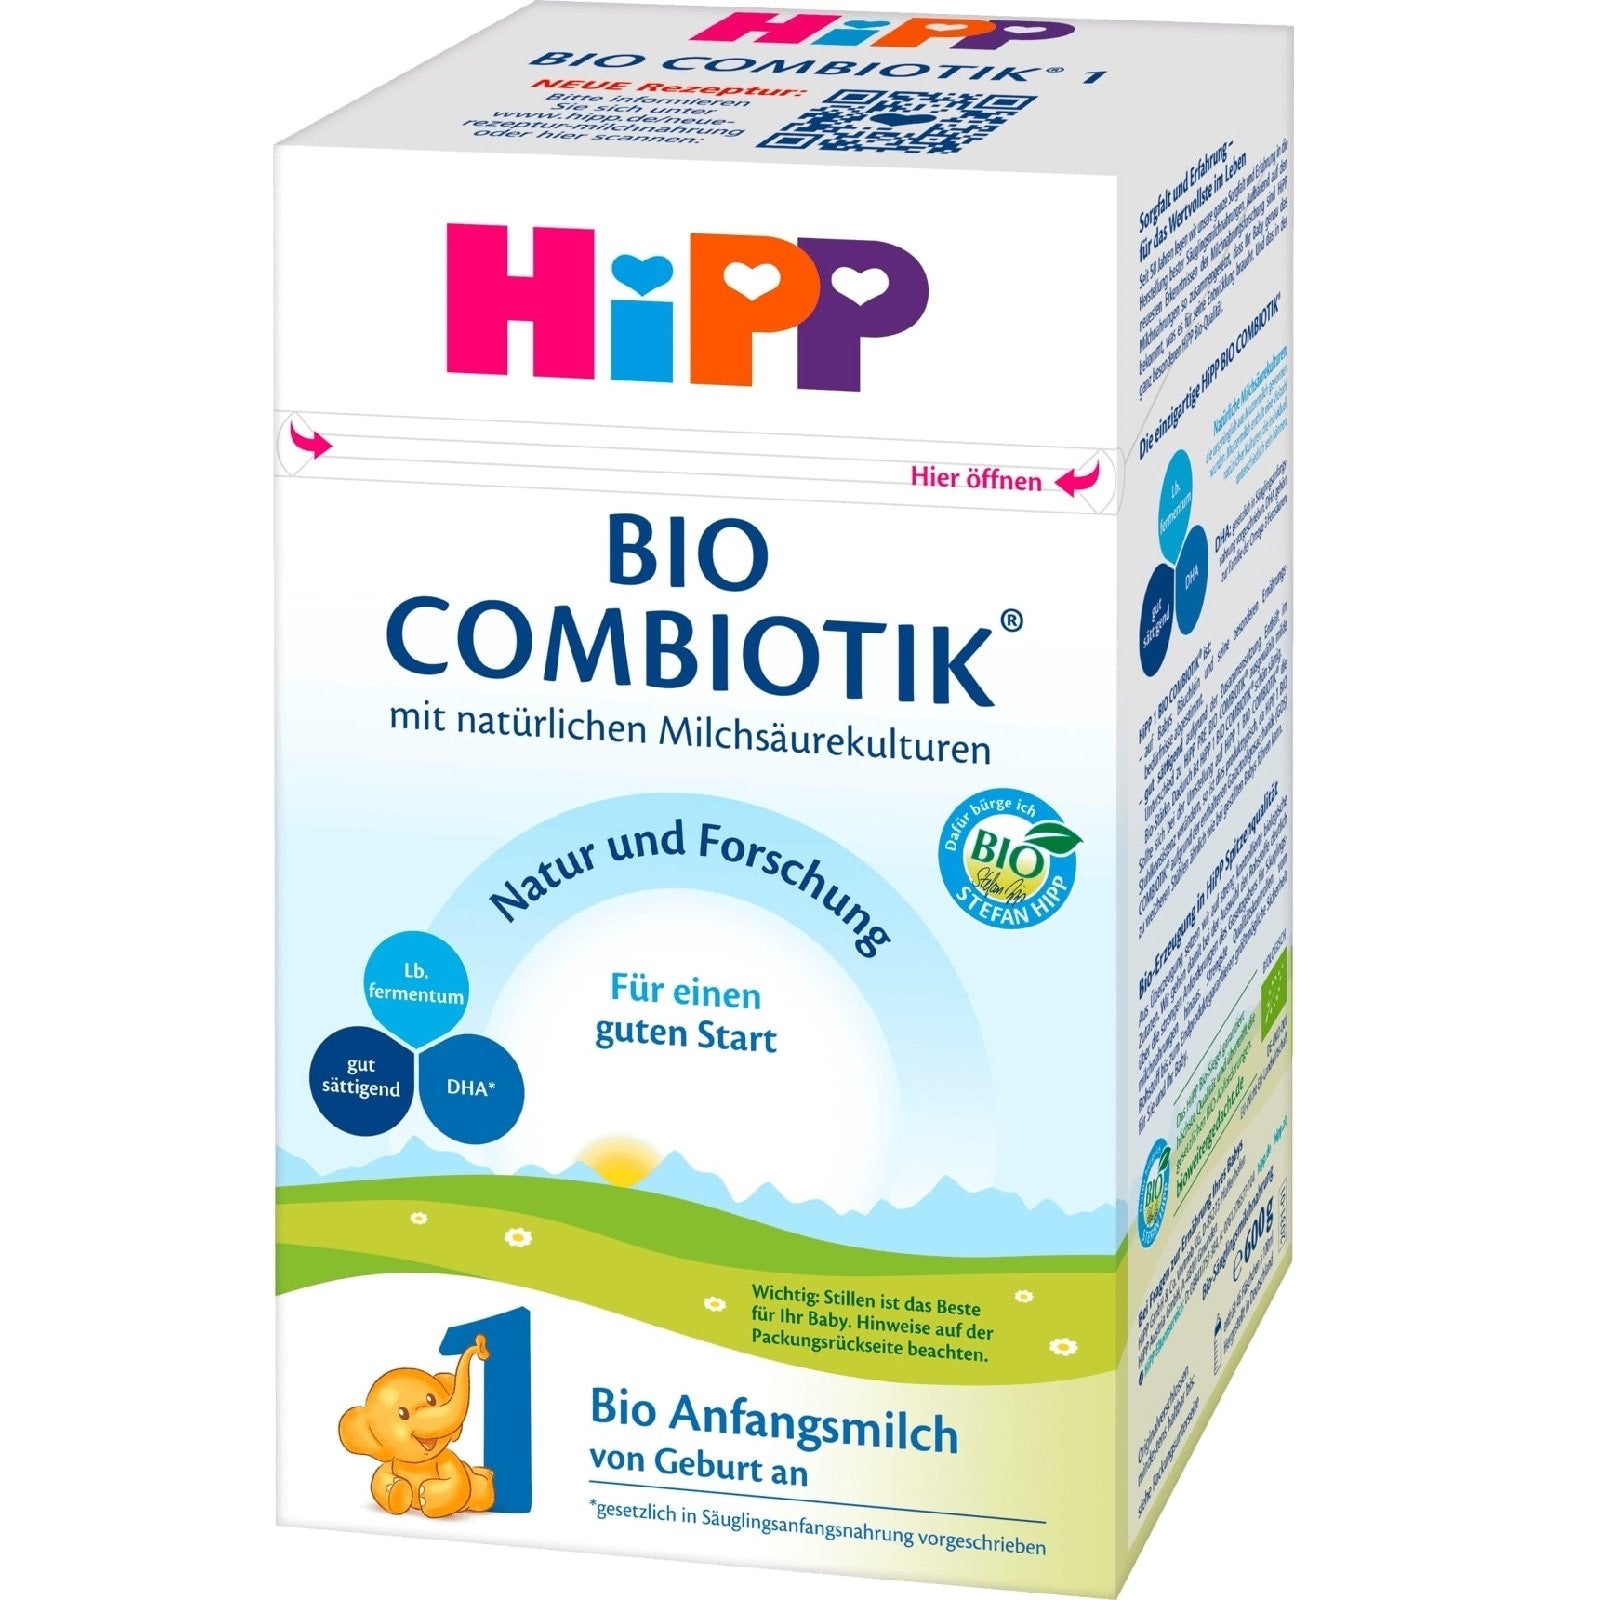 HiPP Stage 1 German - Organic Combiotik Formula (600g)